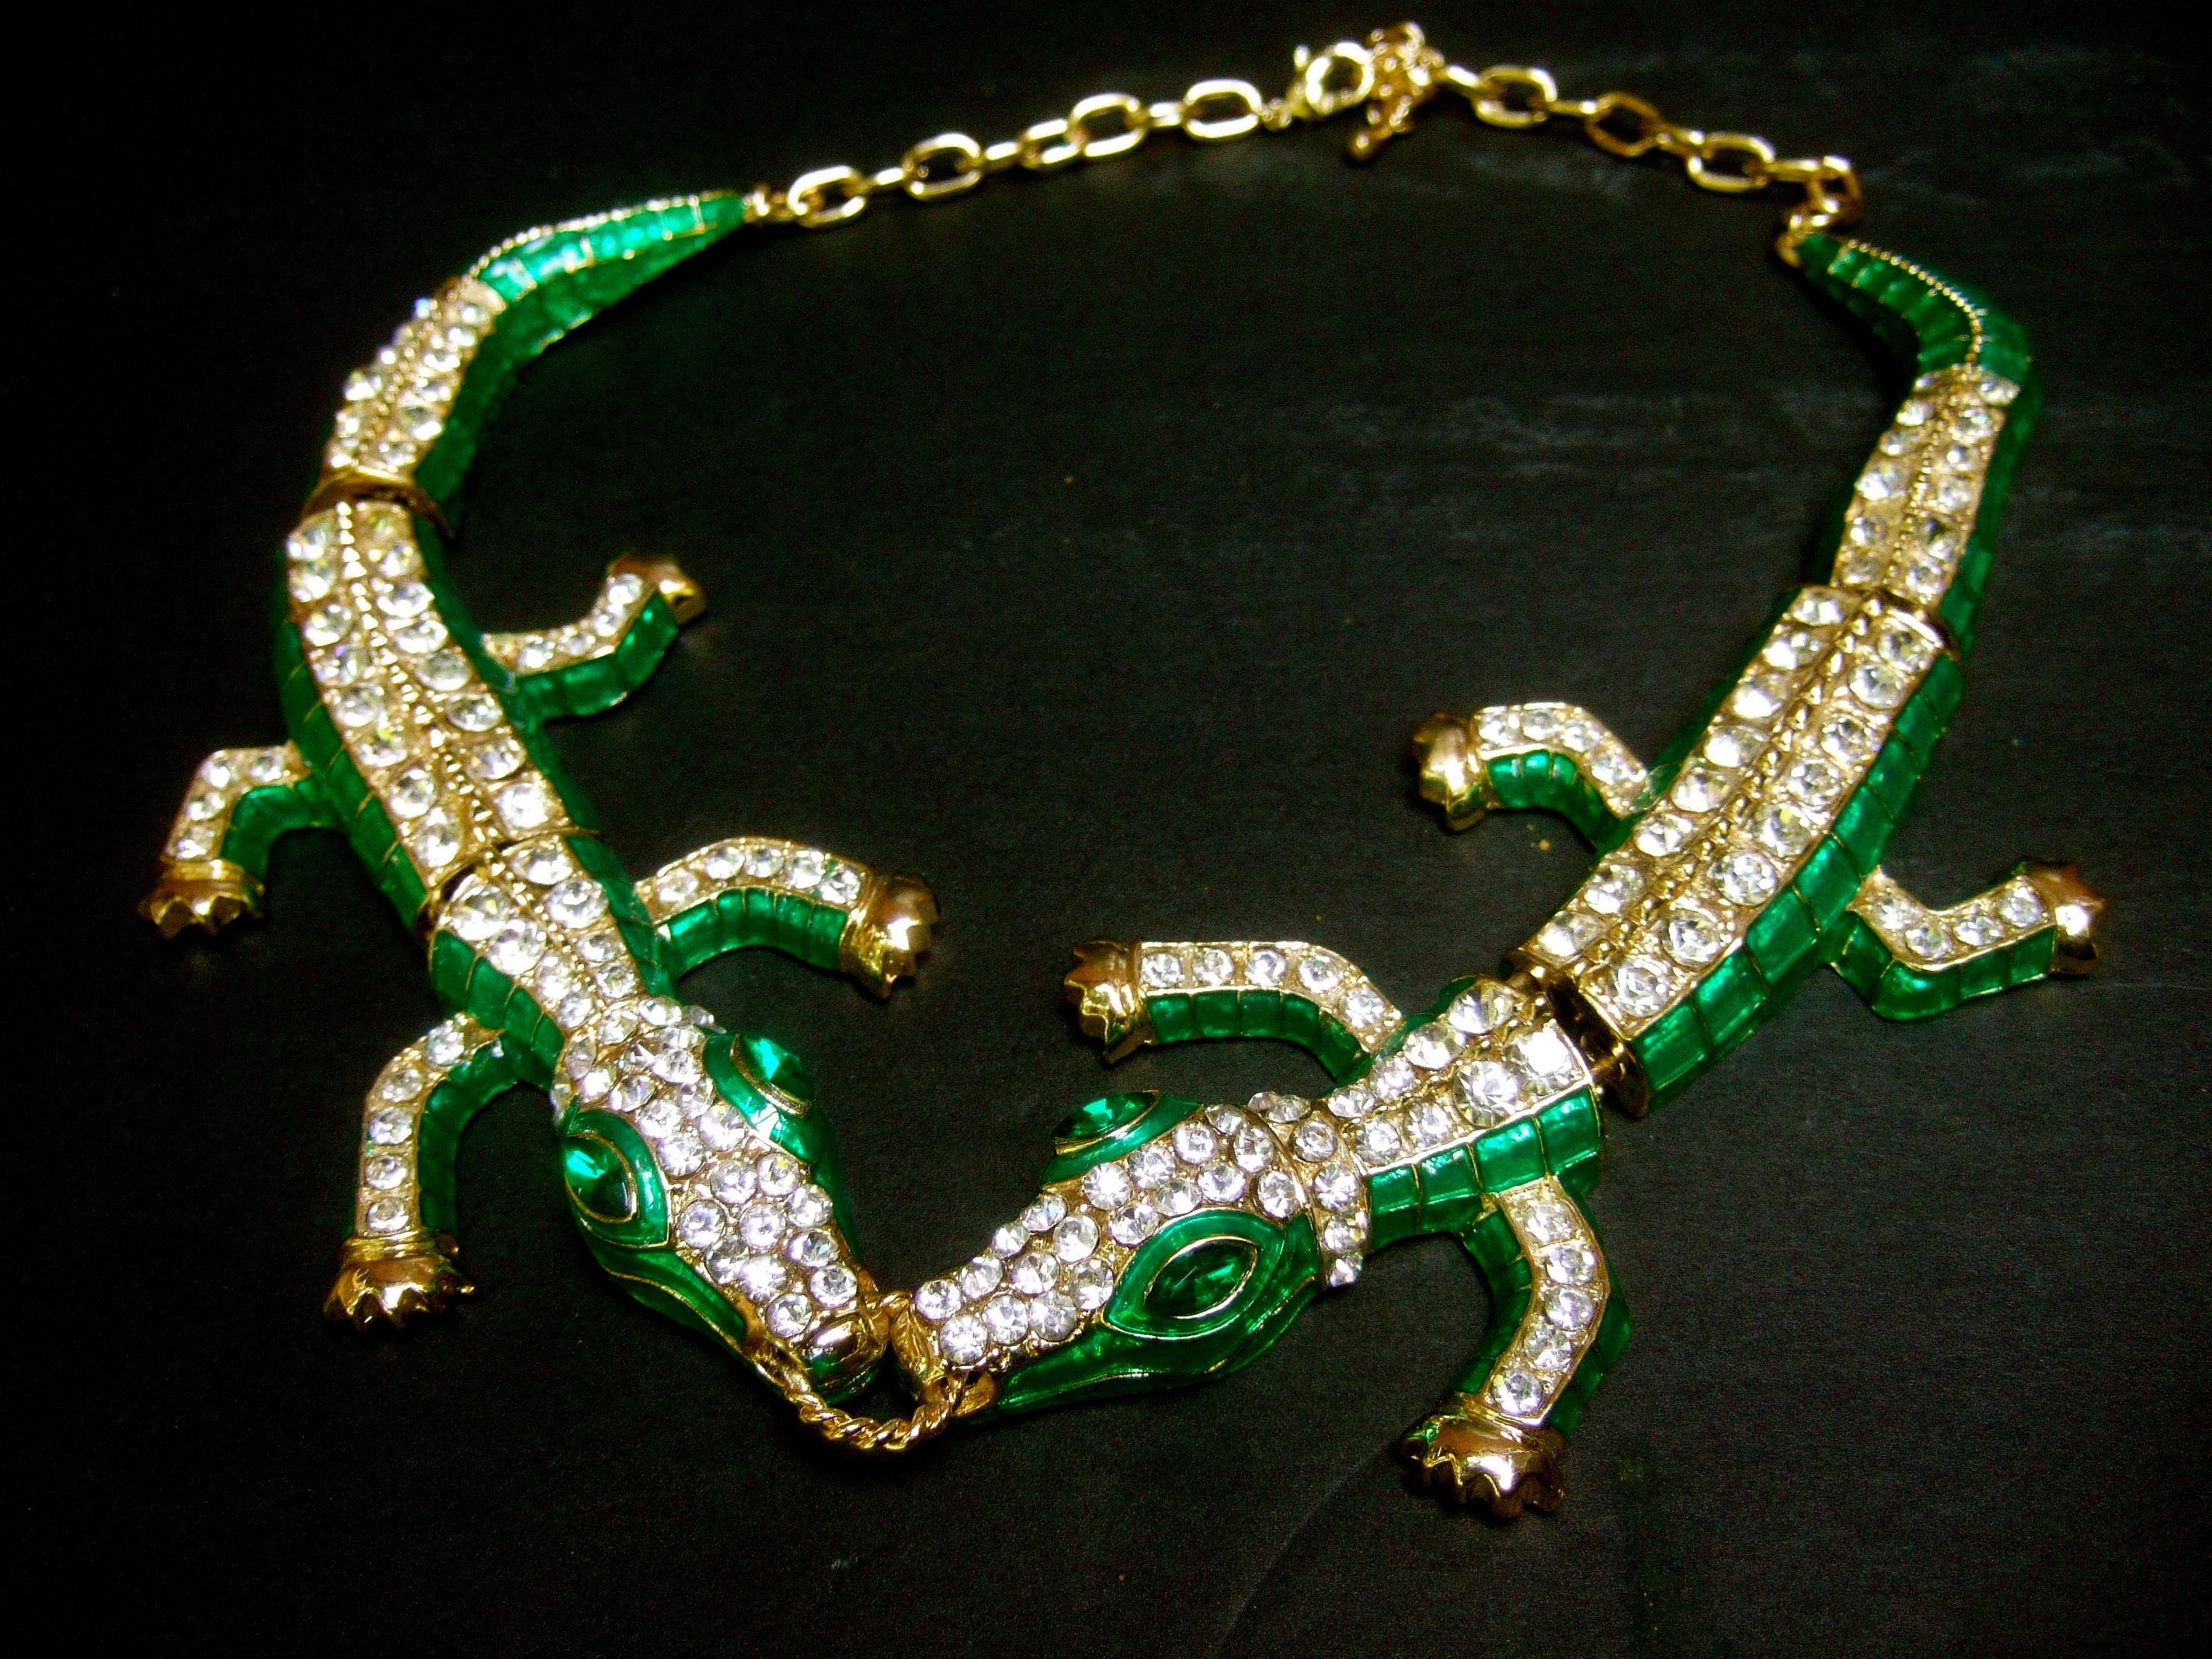 Contemporary Crystal Enamel Articulated Gilt Metal Alligator Necklace circa 21st C